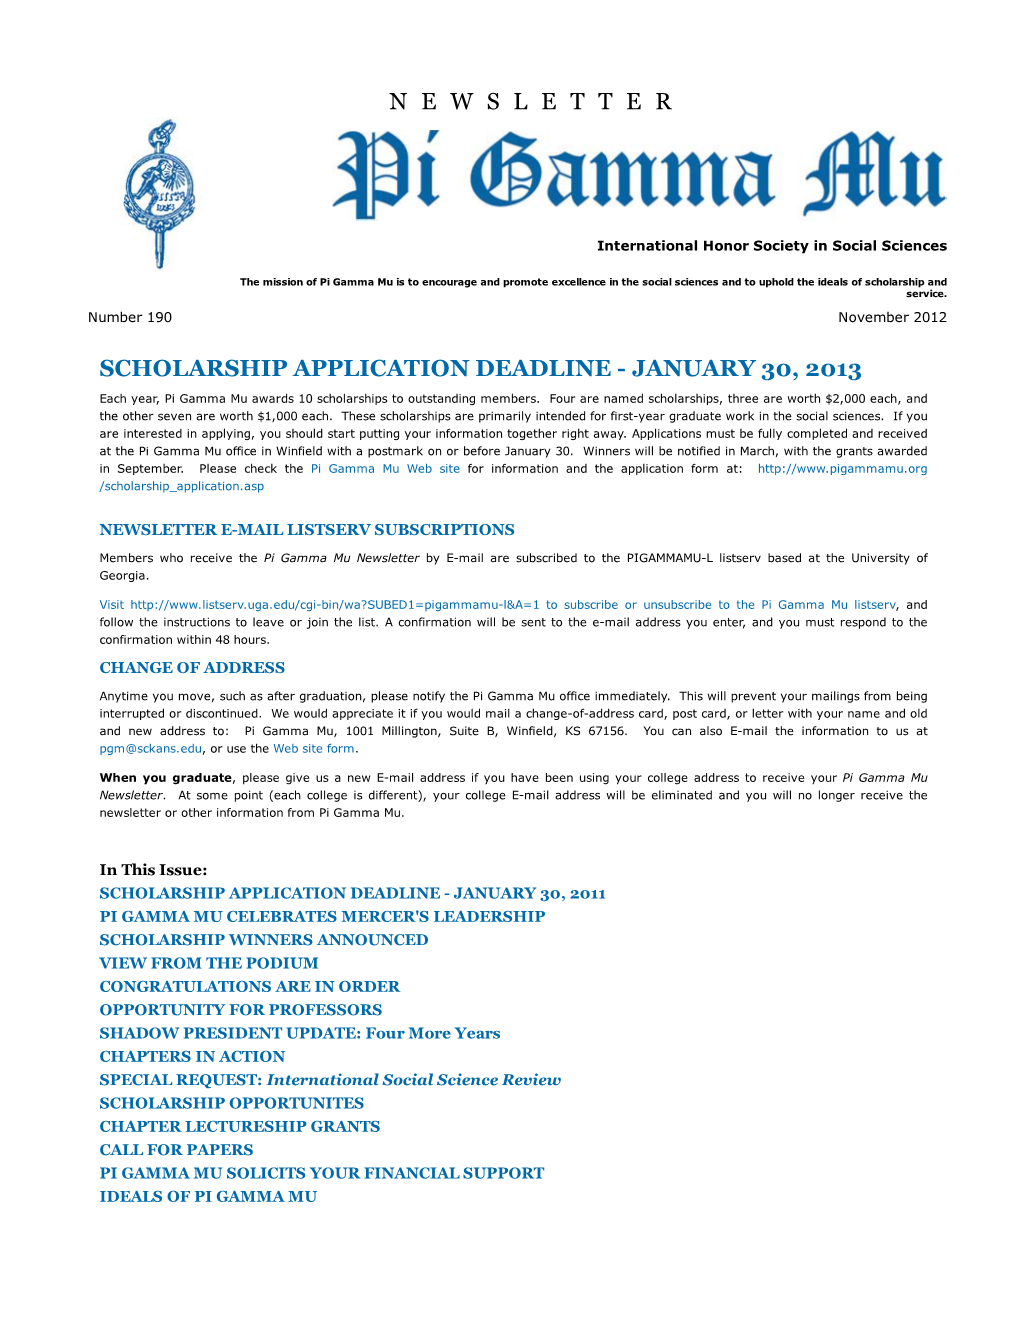 Pi Gamma Mu International Newsletter: November 2012